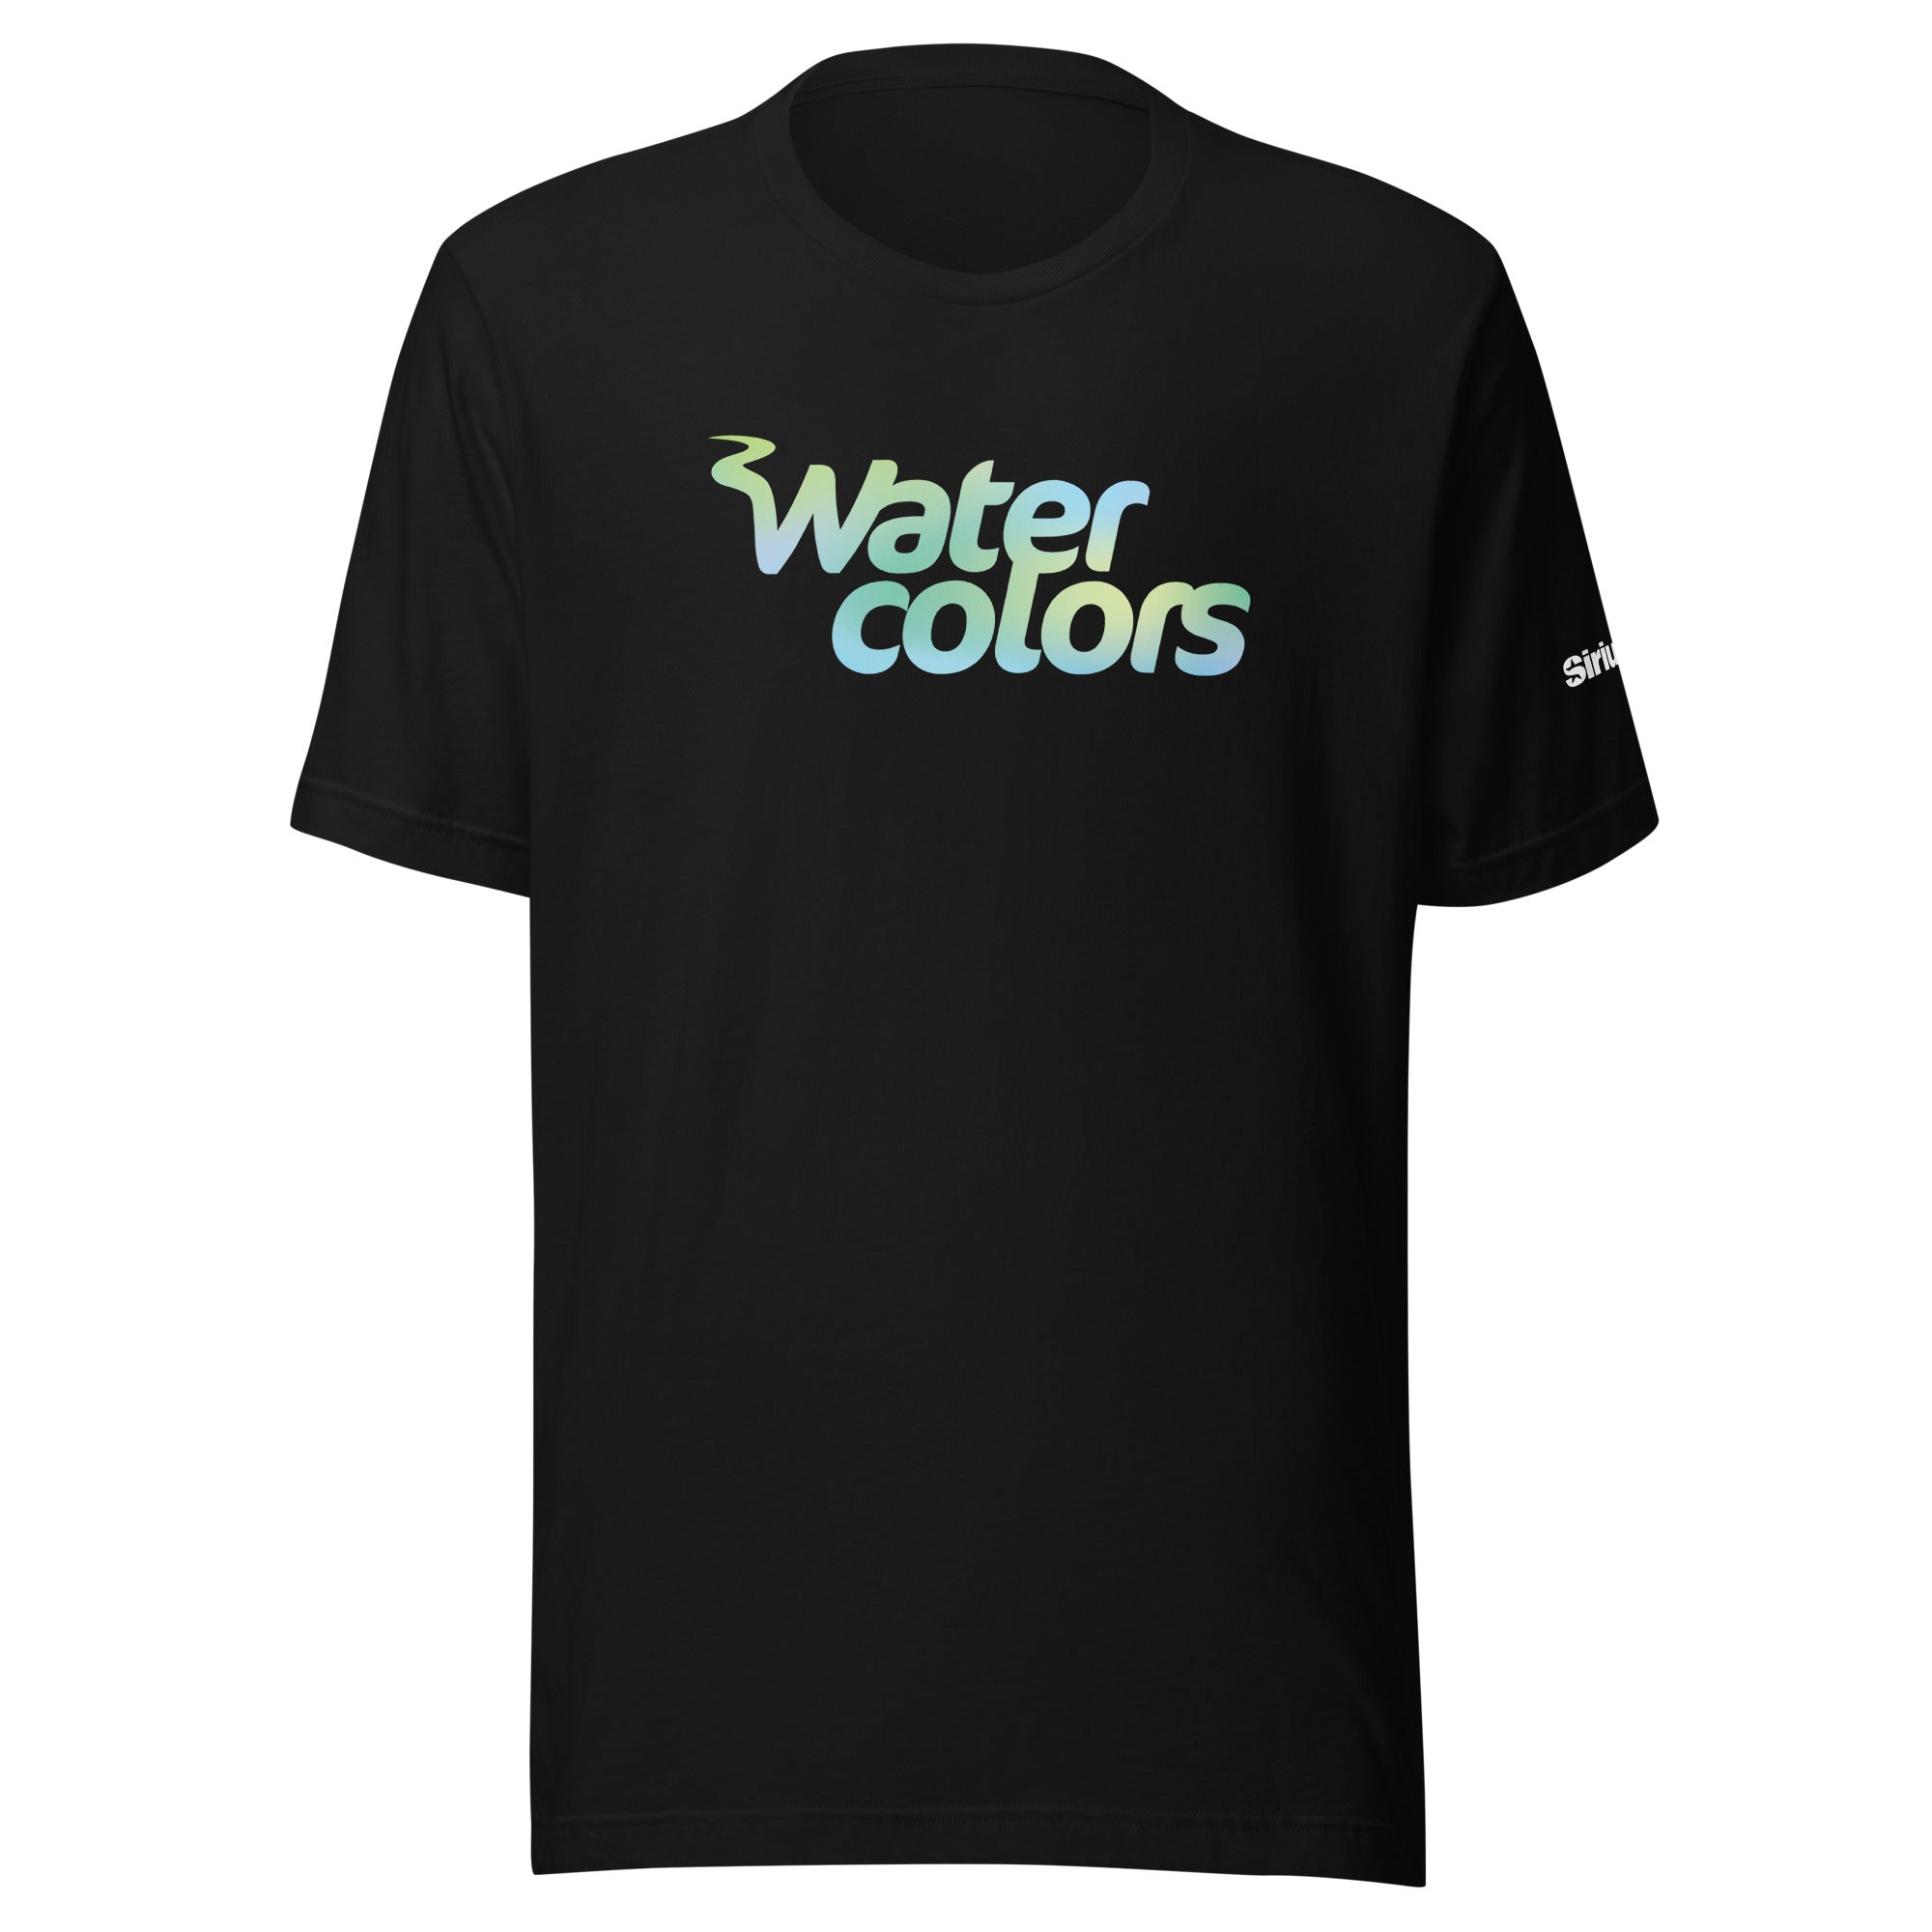 Watercolors: T-shirt (Black)